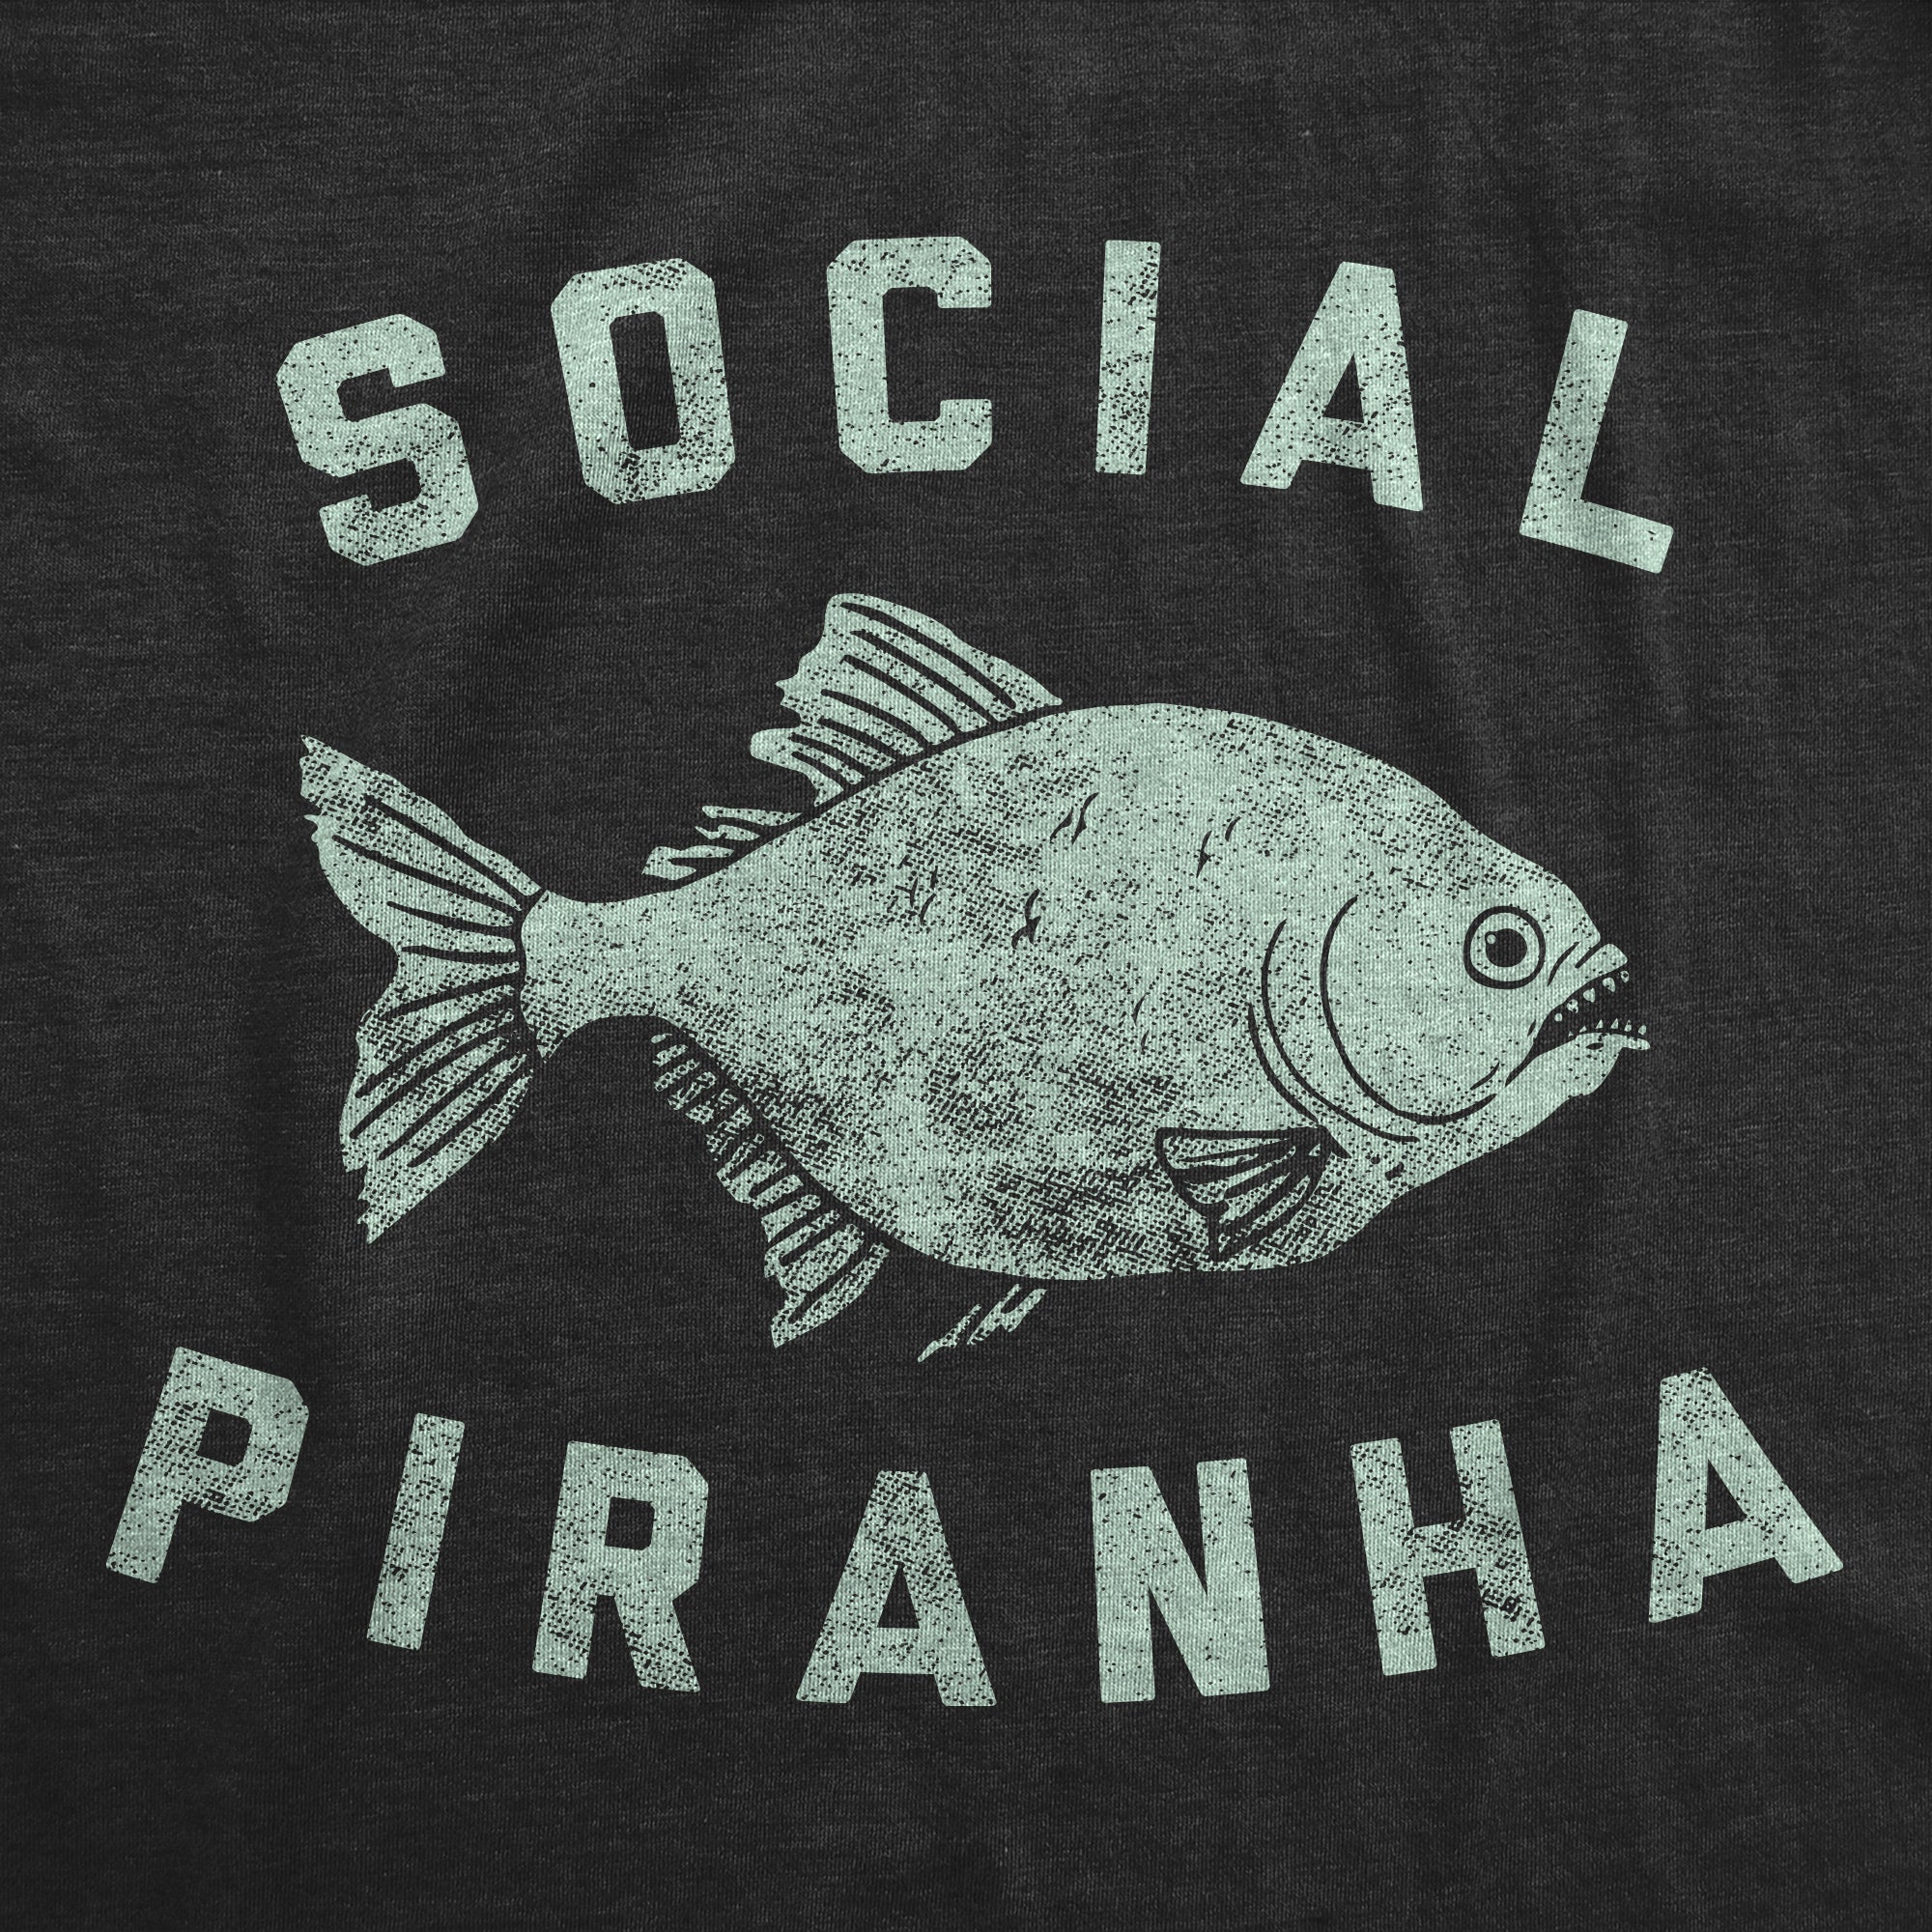 Funny Heather Black - Social Piranha Social Piranha Mens T Shirt Nerdy animal sarcastic Tee